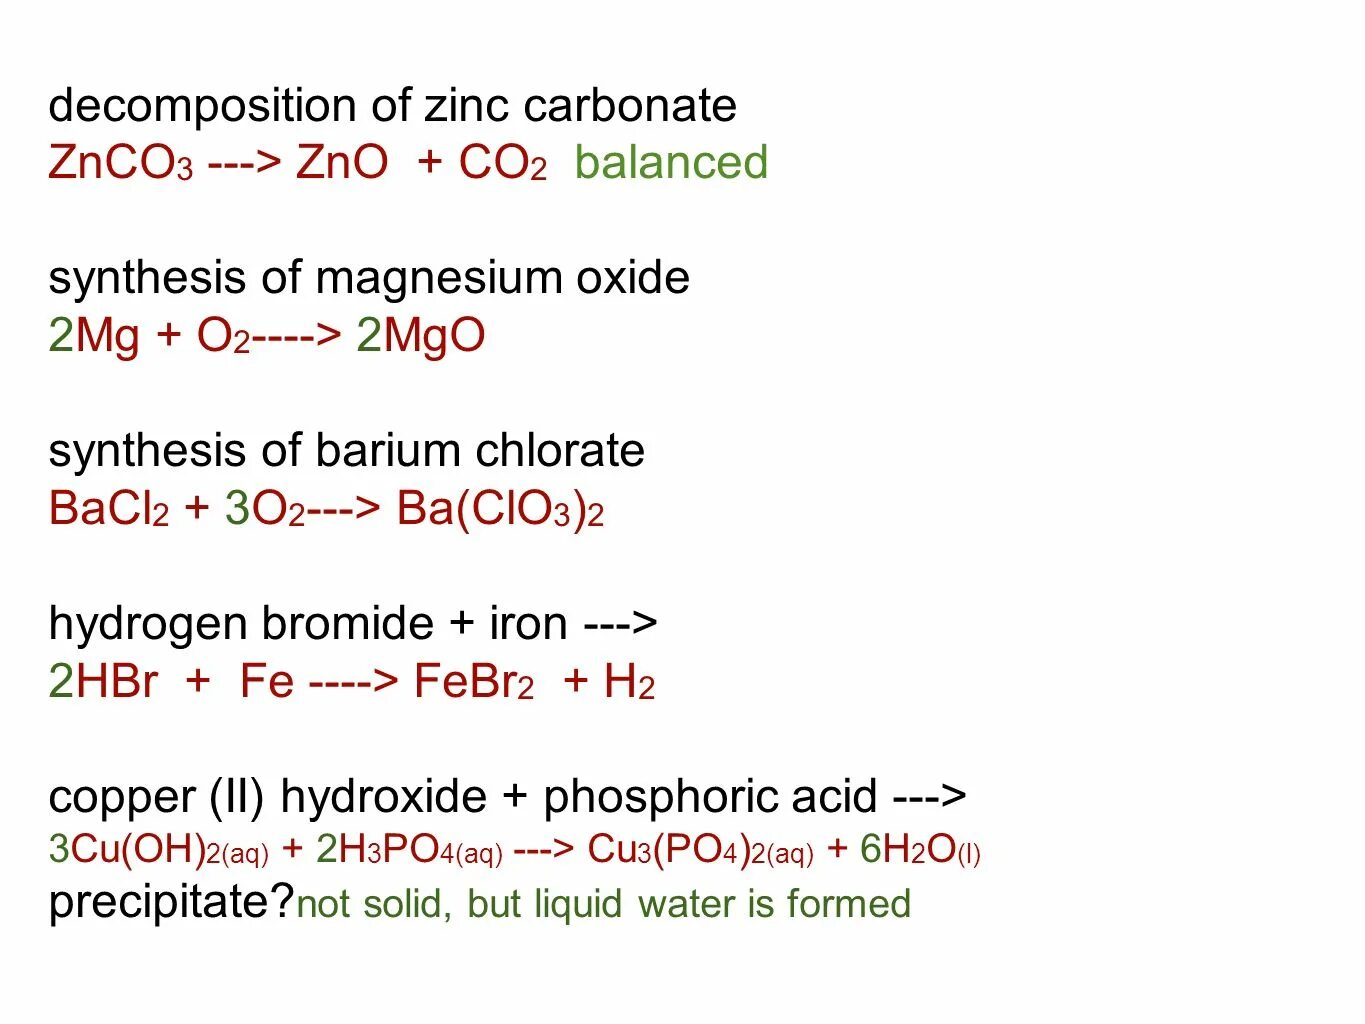 Mgo zno реакция. Znco3 ZNO co2. Co2 → znco3. ZNO+co2 уравнение. Znco3-ZNO-ZN.